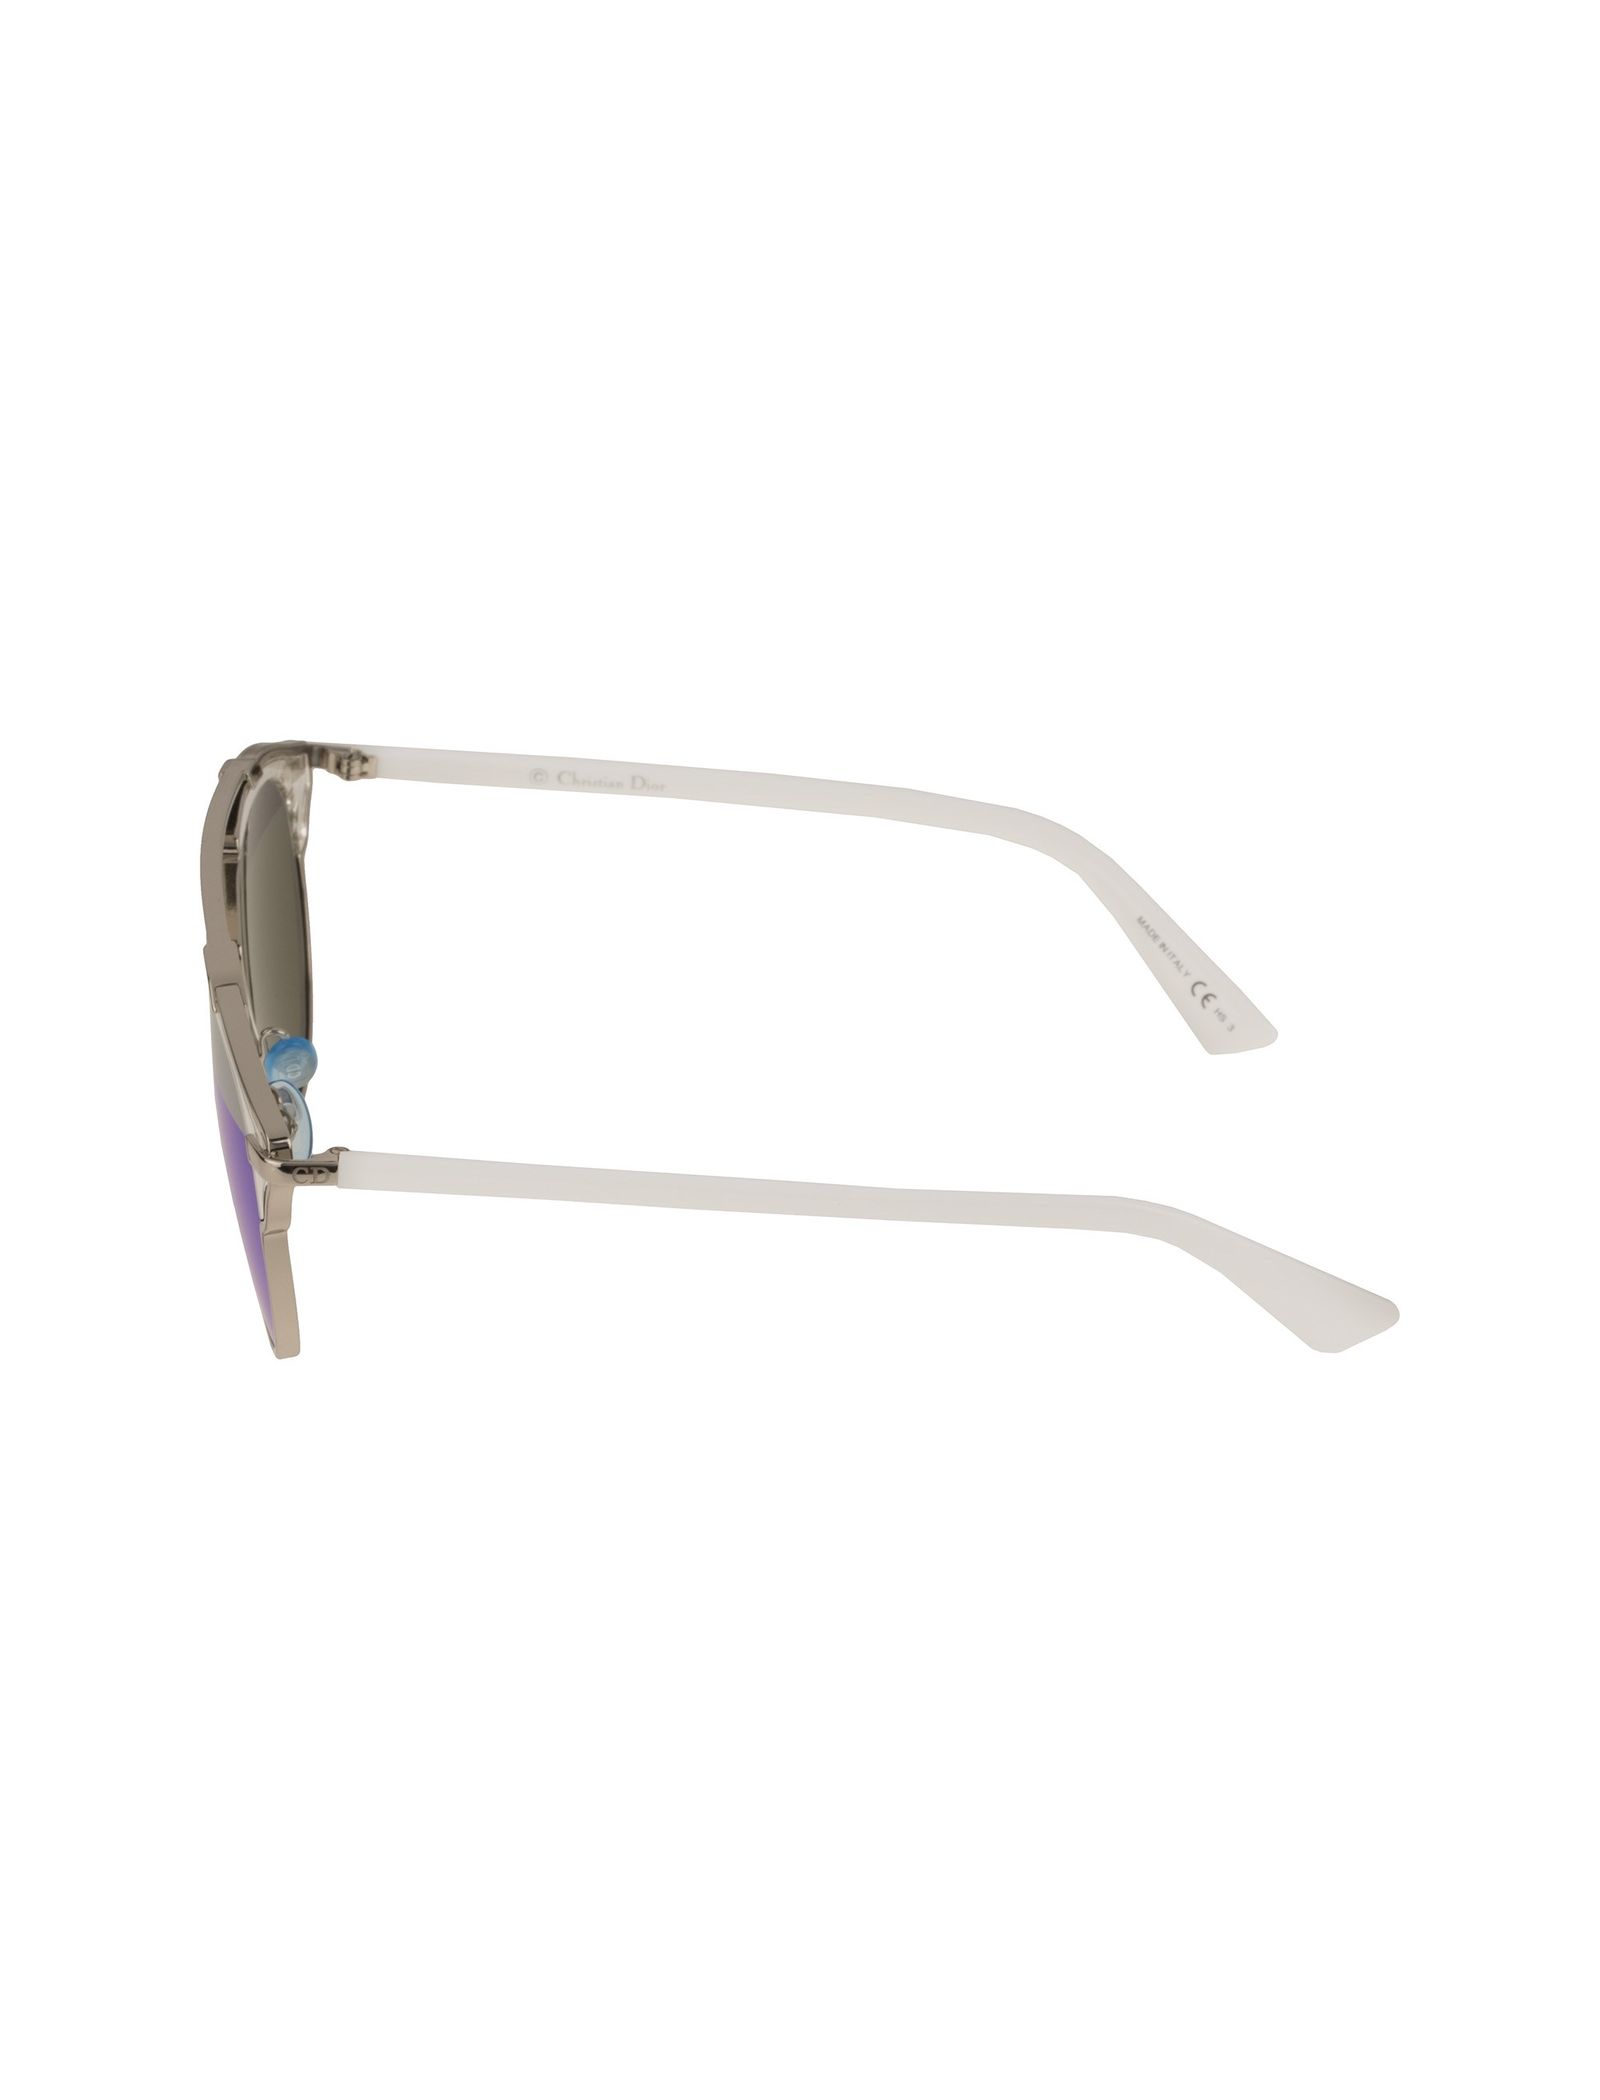 عینک آفتابی پنتوس زنانه - دیور - نقره اي و سفيد - 4